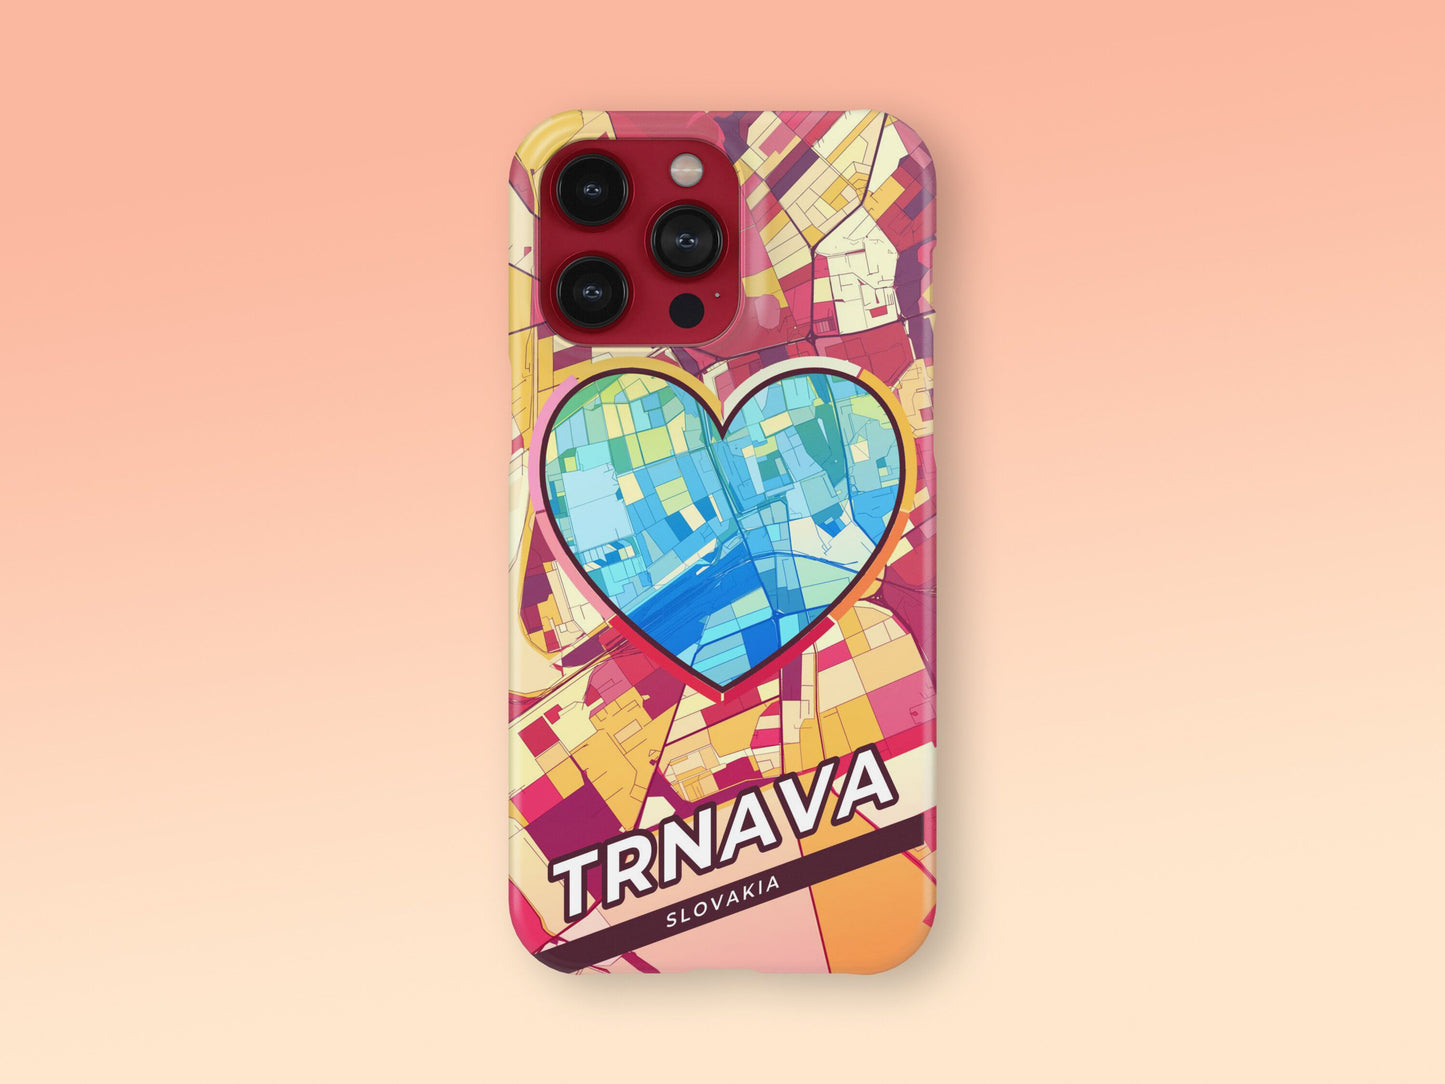 Trnava Slovakia slim phone case with colorful icon 2